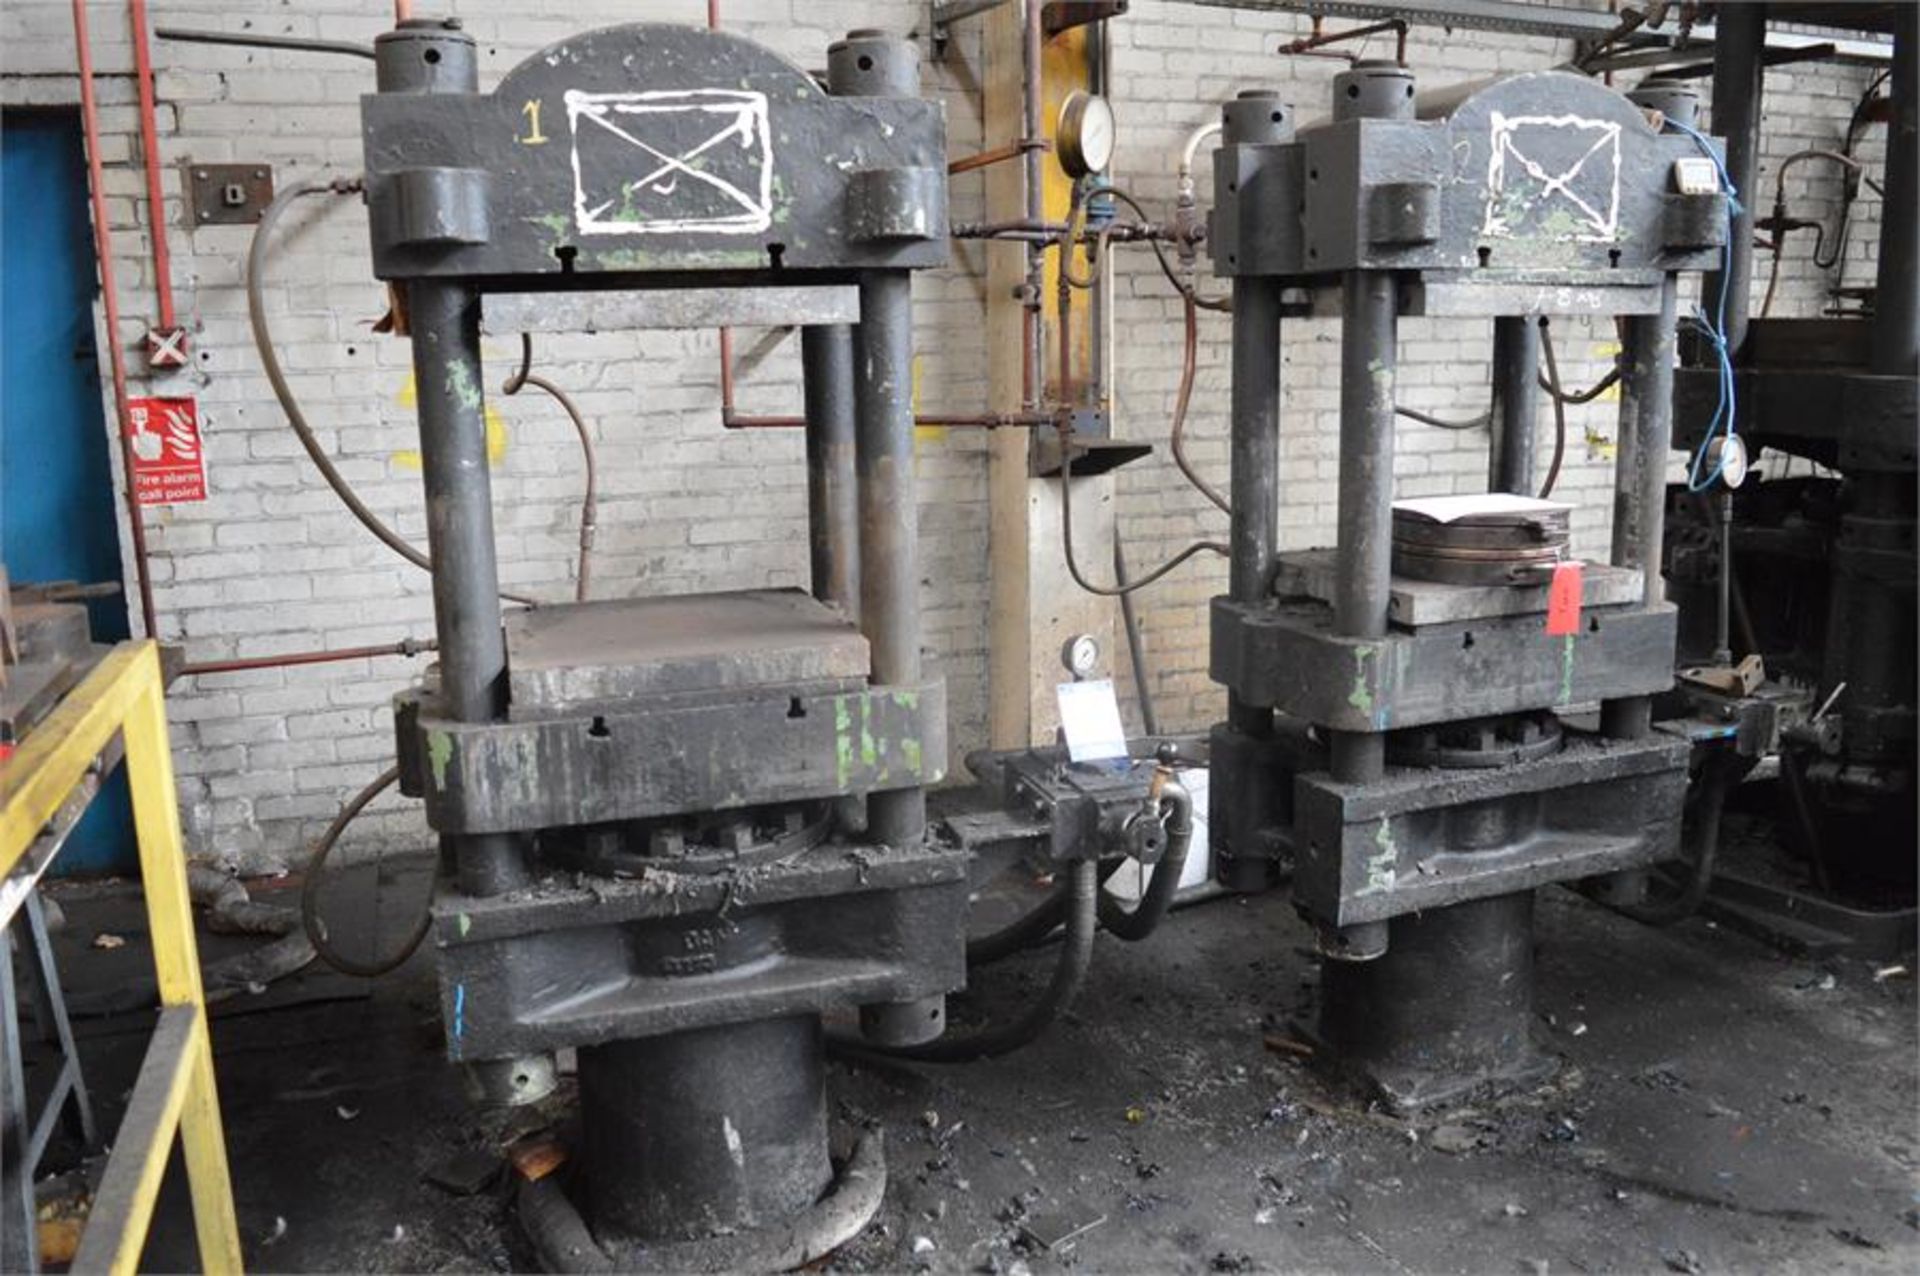 2 x Unbadged hydraulic upstroke platen presses, 20" x 20" steam heated platens with hydraulic